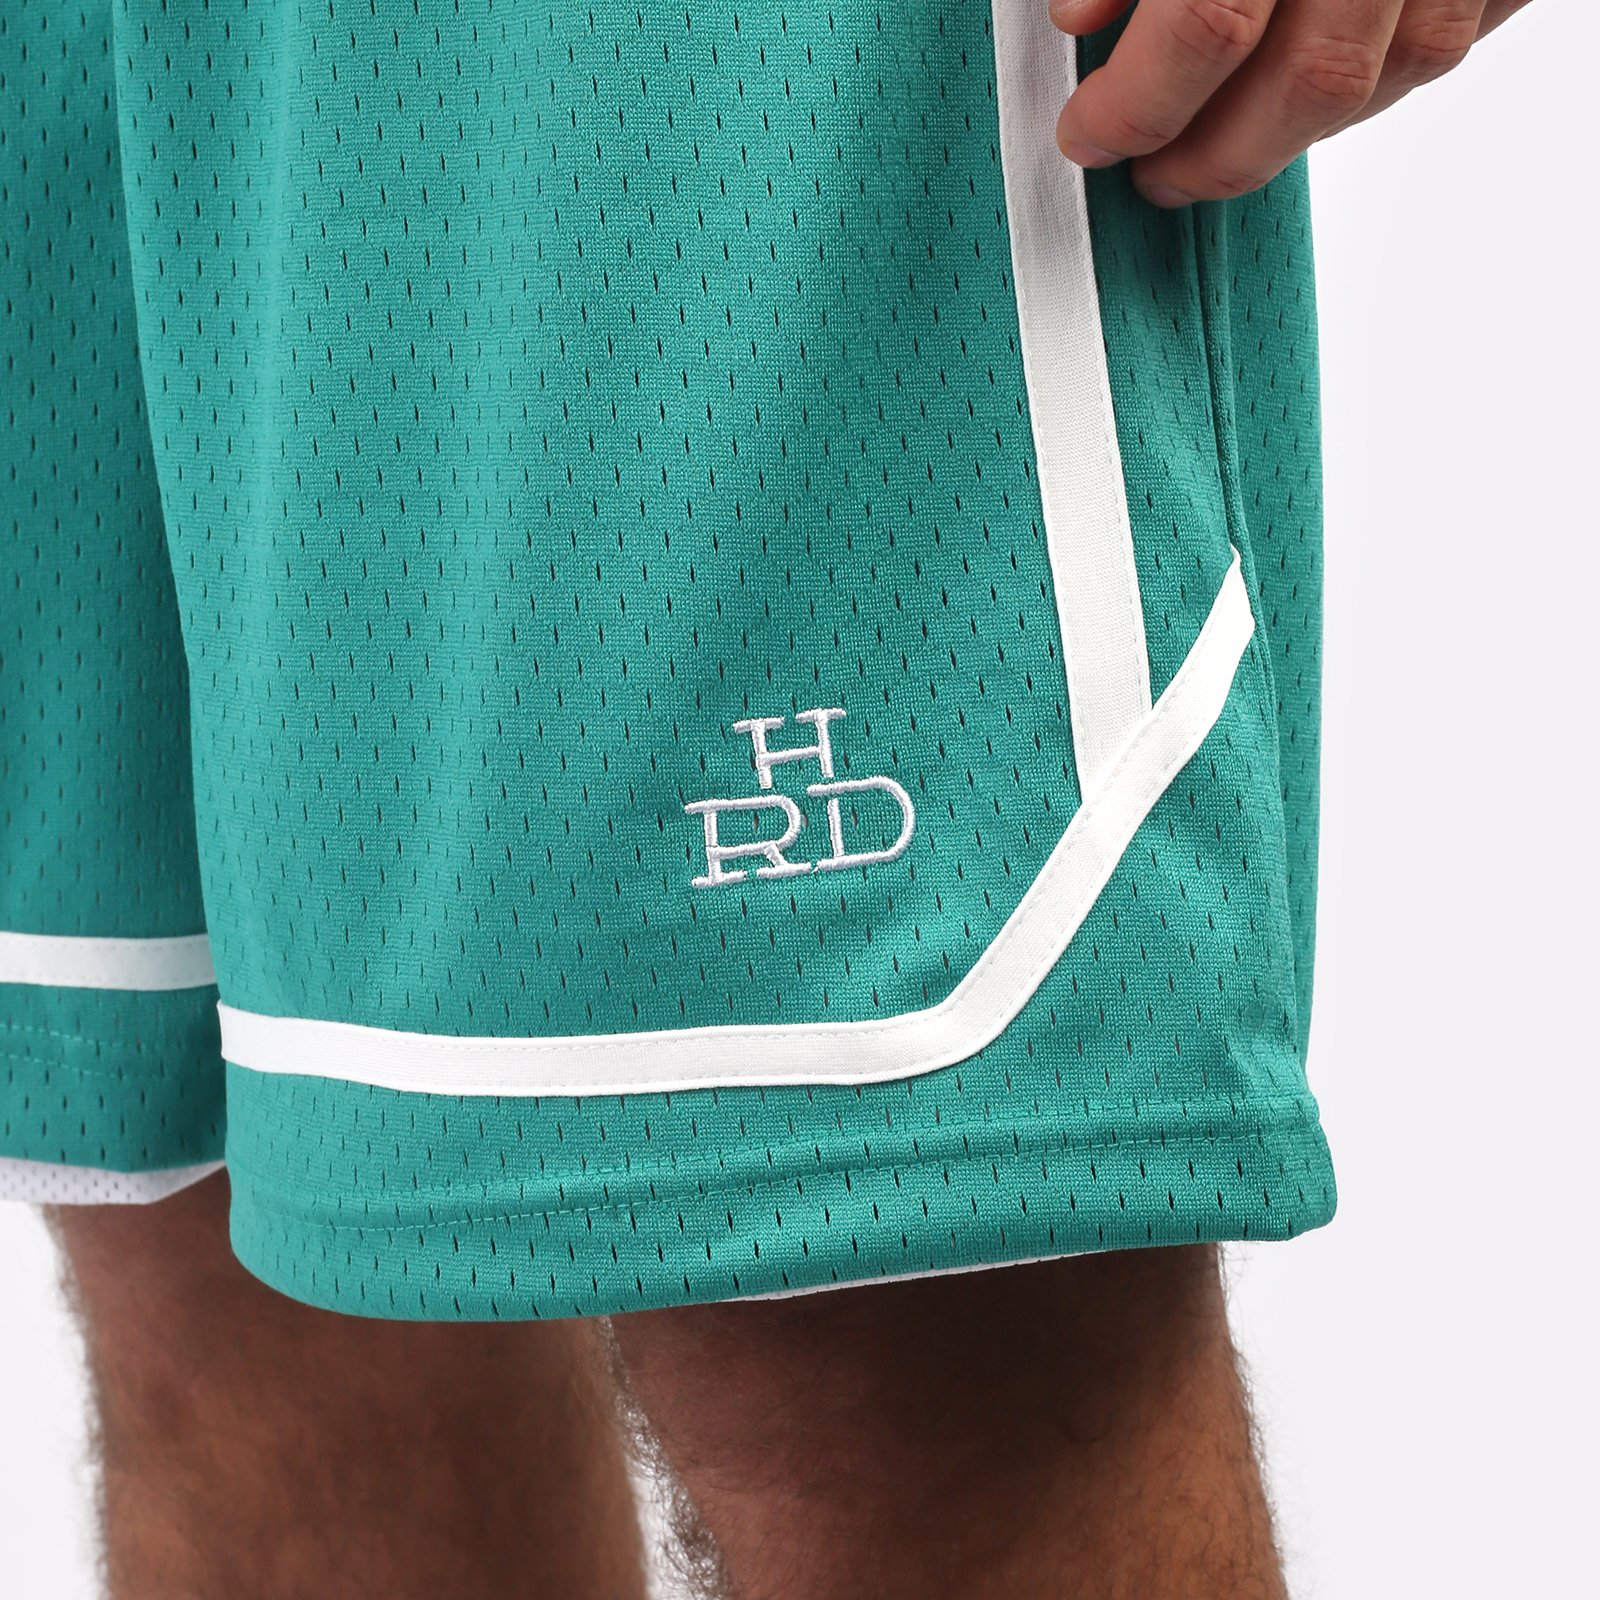 мужские зеленые шорты Hard Teammate Teammate short-grn/wht - цена, описание, фото 3